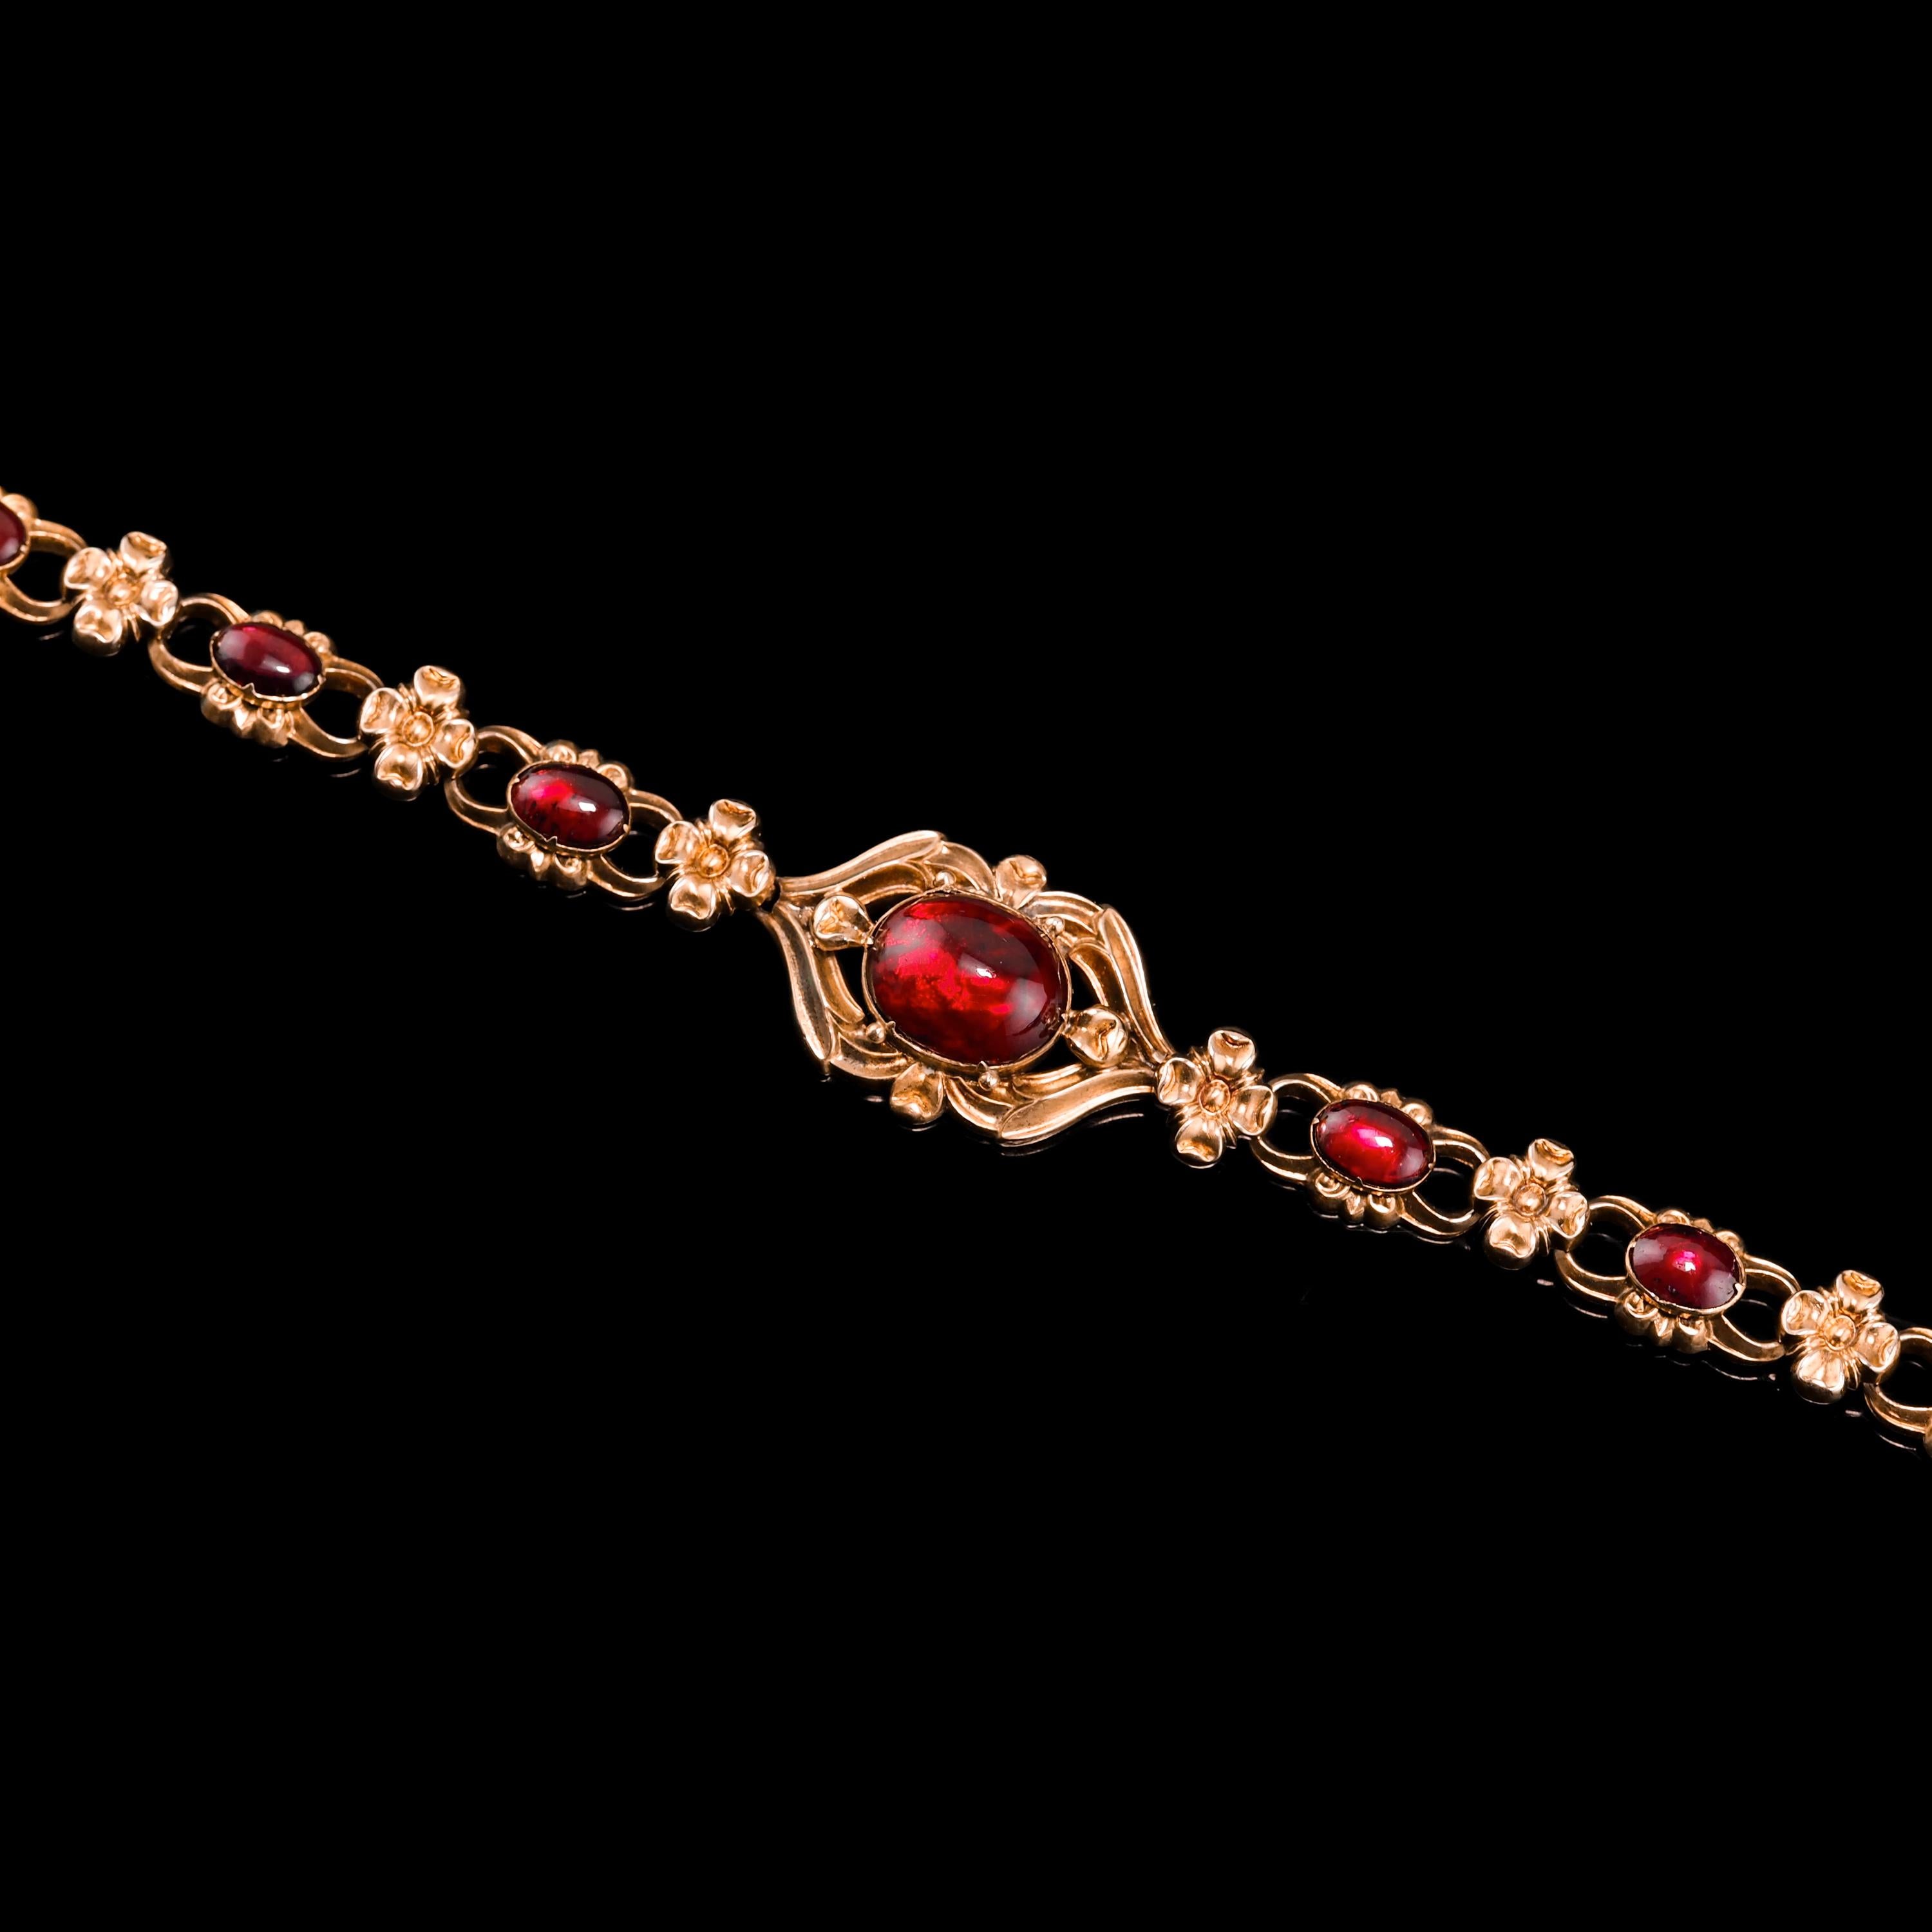 Women's or Men's Antique Garnet Bracelet Victorian 18k Gold Cabochon Floral Design, circa 1840 For Sale